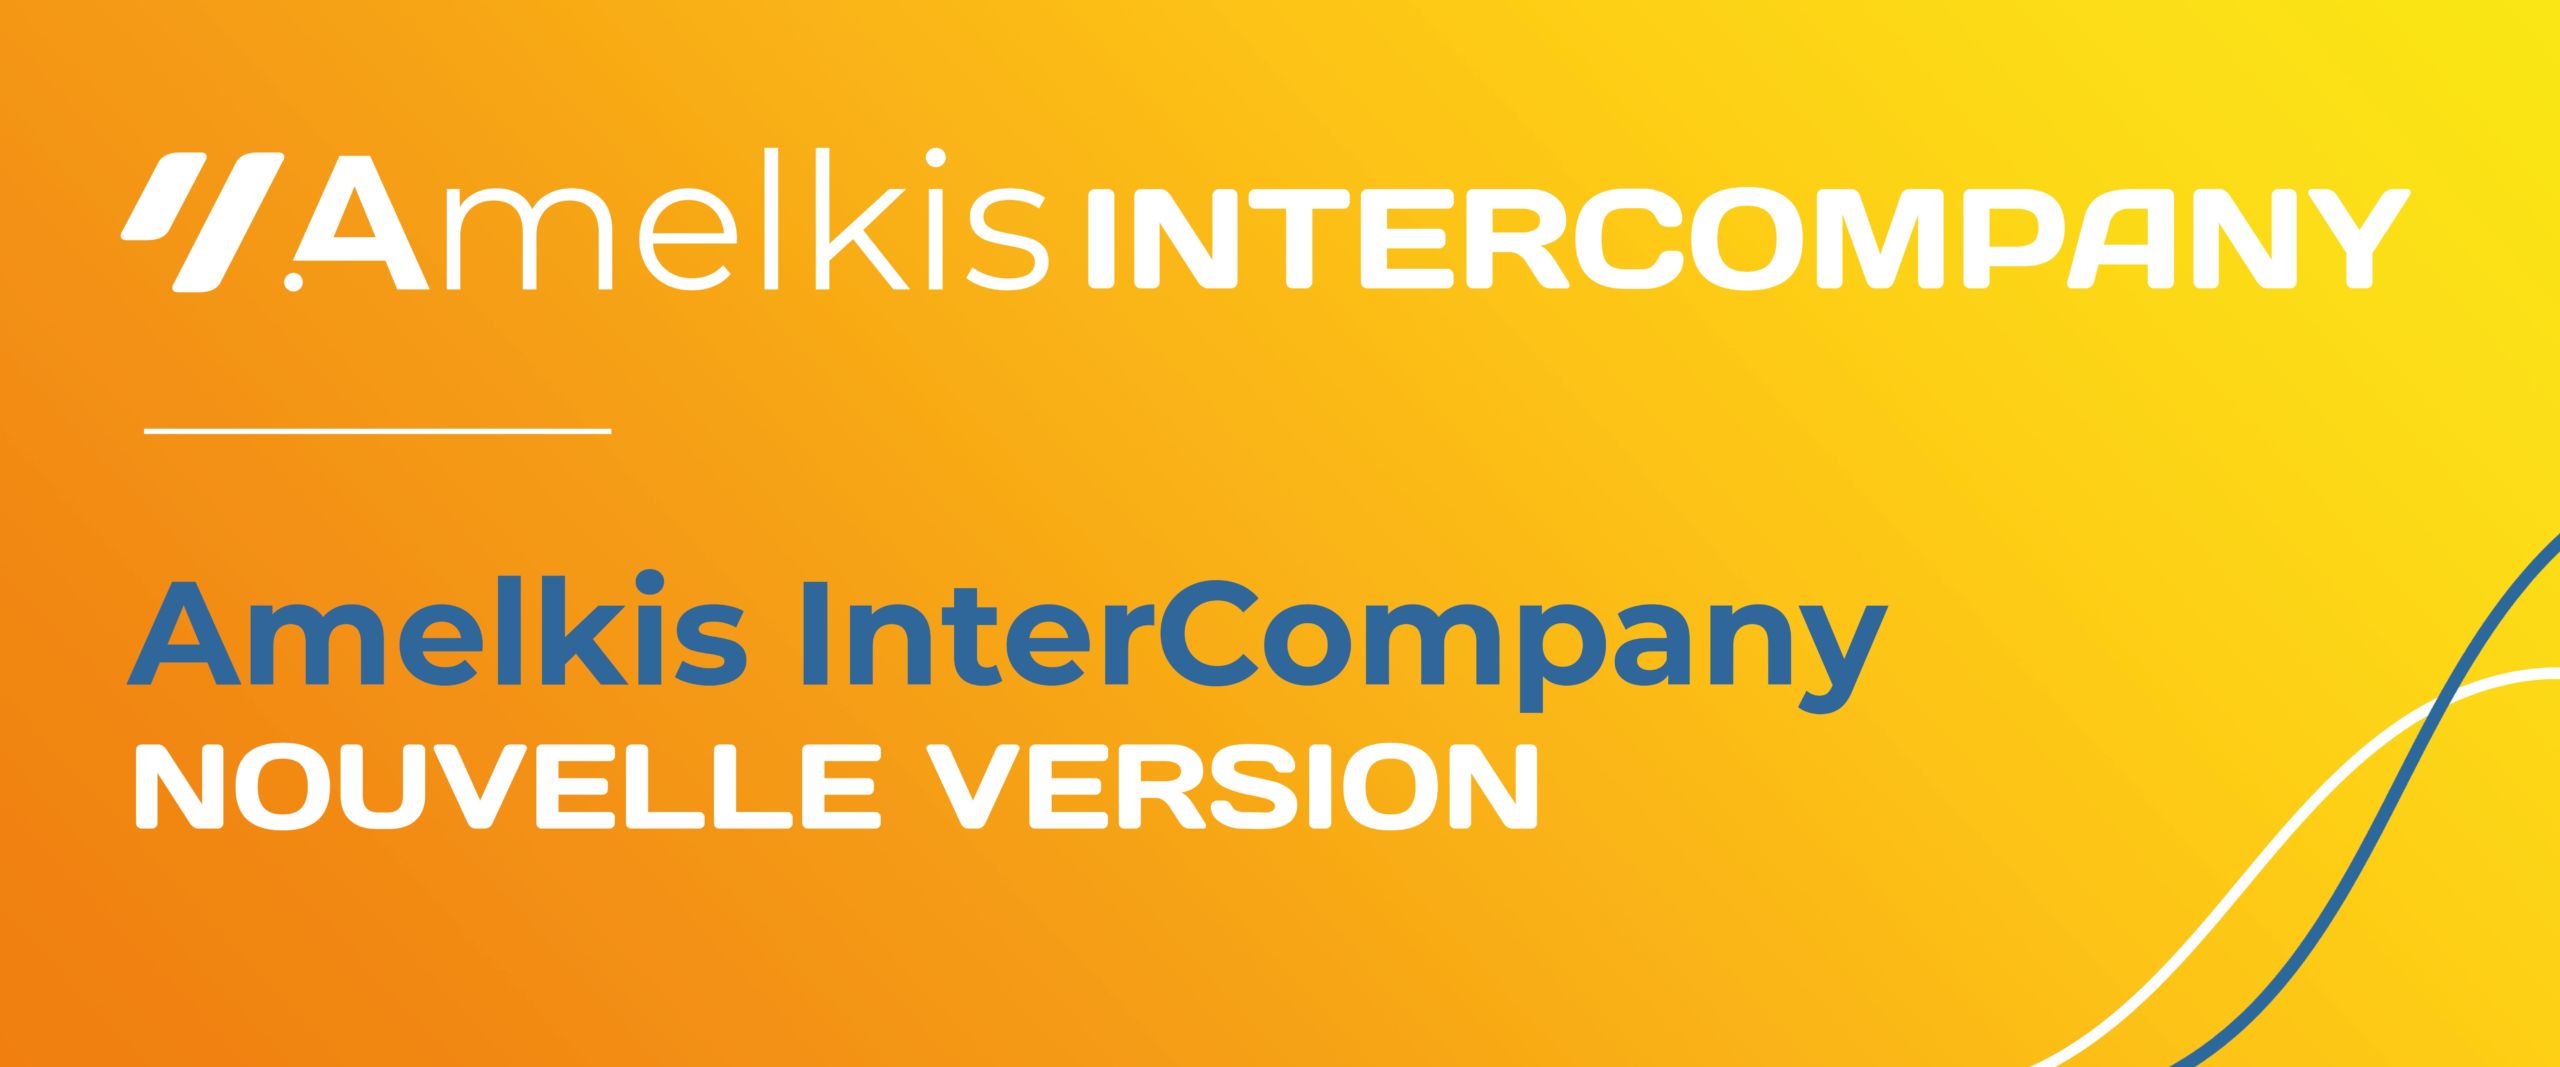 Nouvelle version Amelkis InterCompany (2.0.0.27)